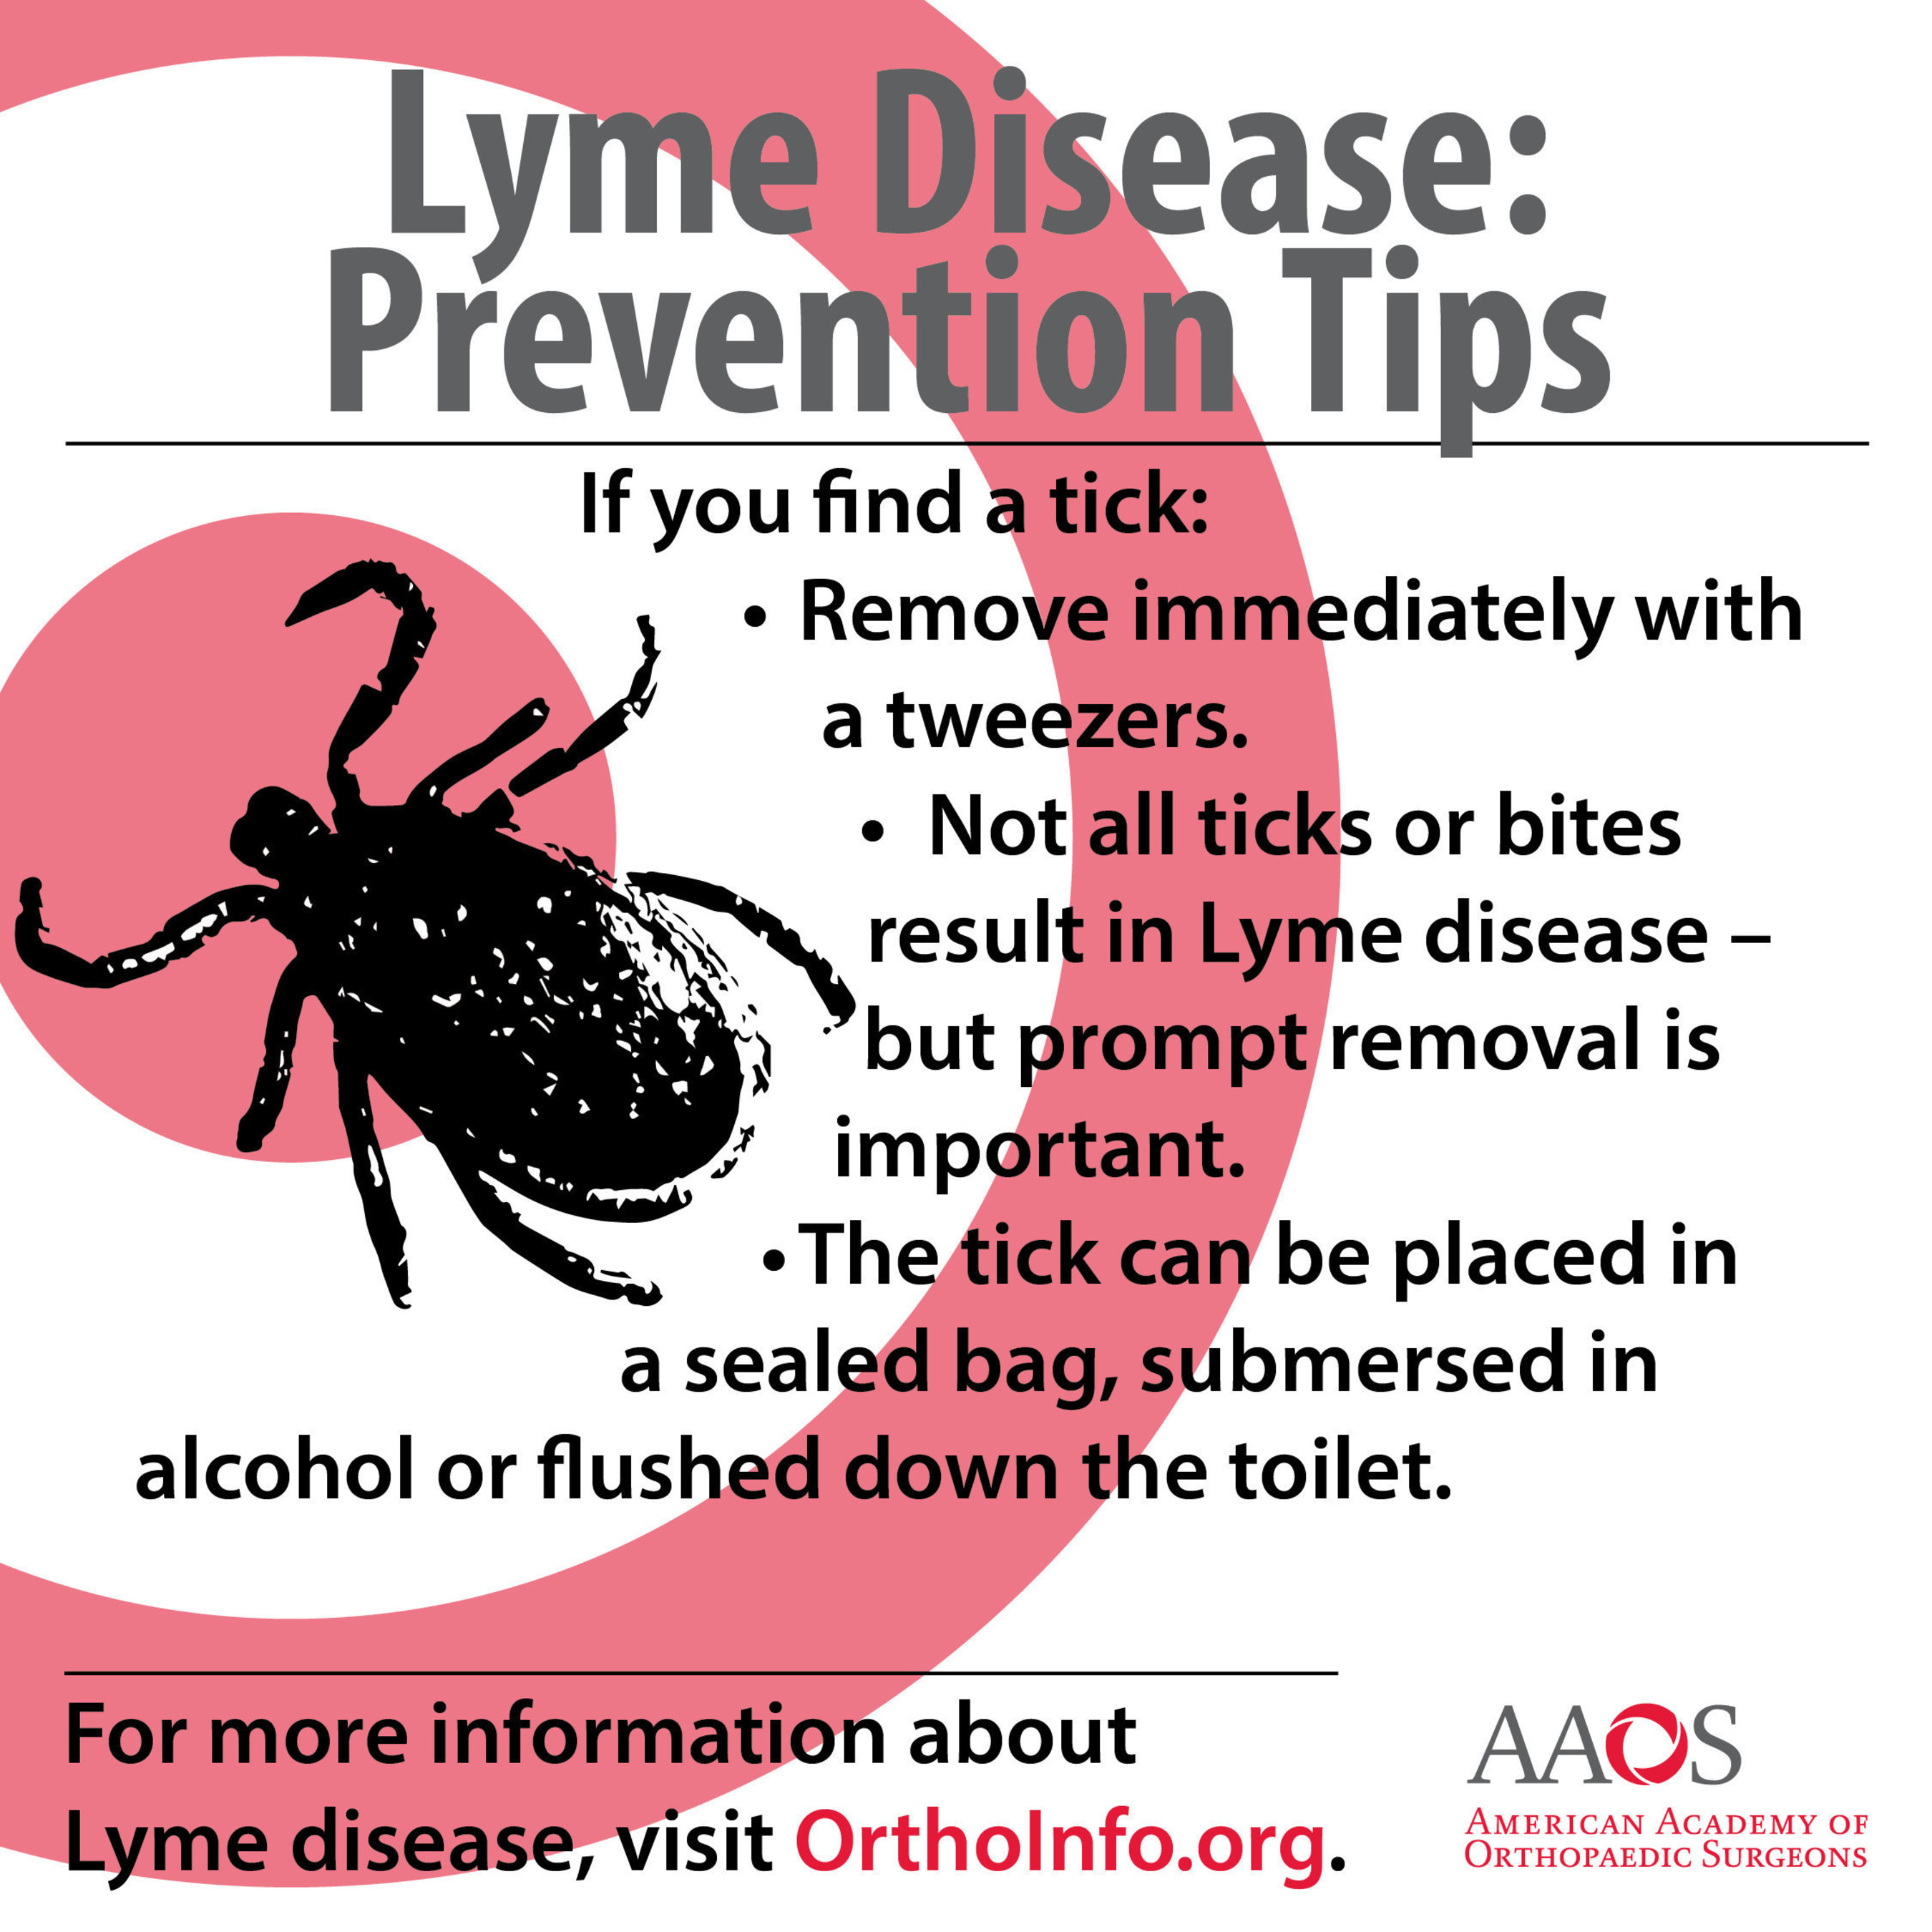 Lyme disease prevention tips